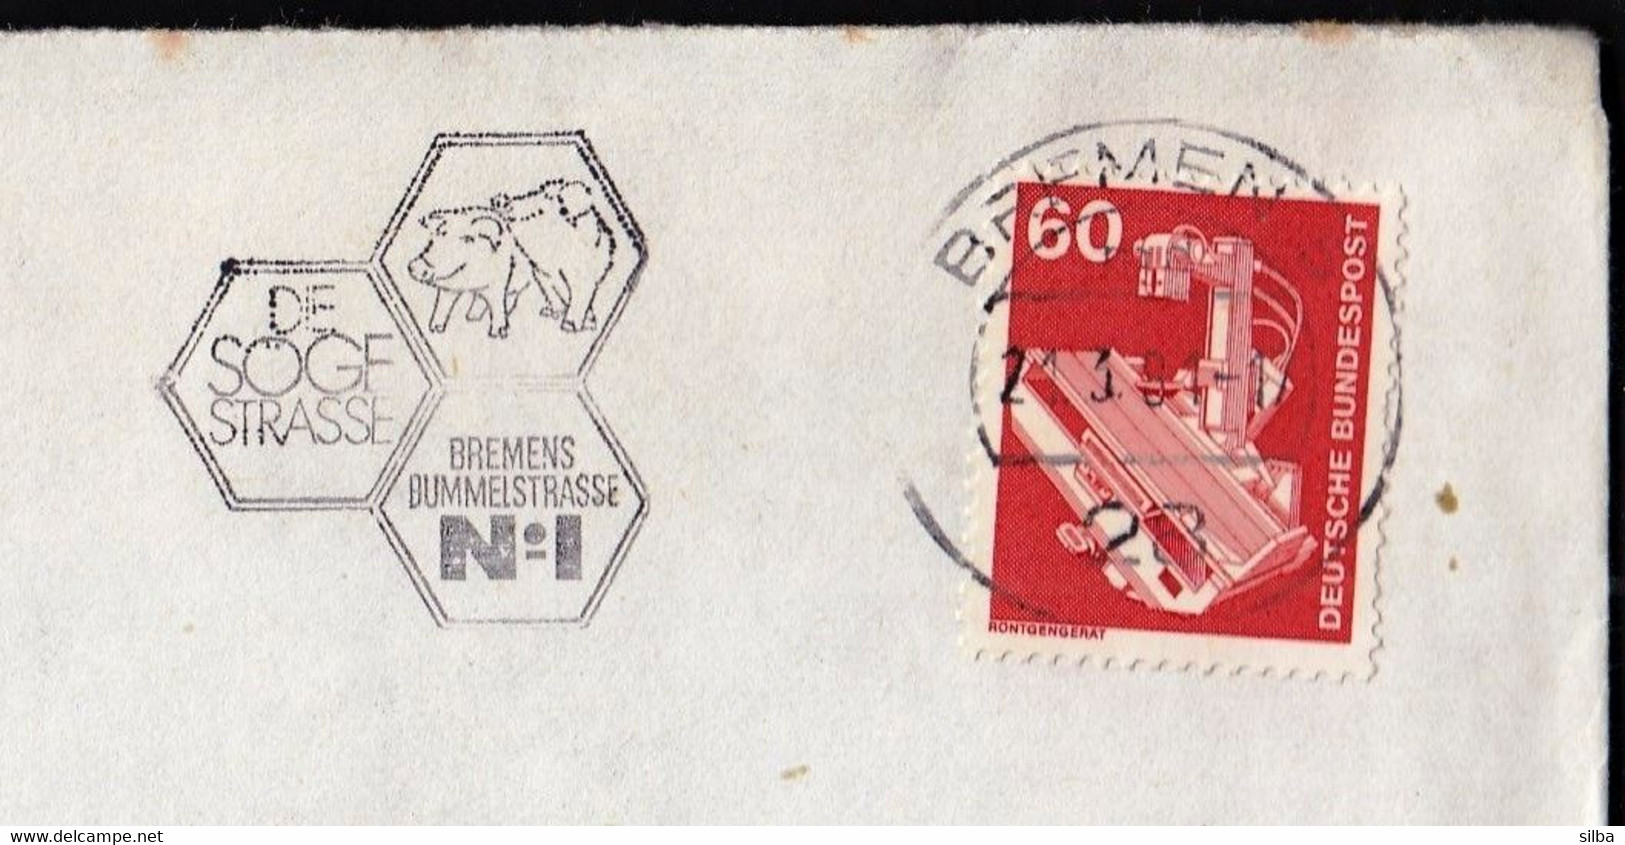 Germany Bremen 1981 / De Soge - Strasse / Schweine Stempel Ratskeller / Pig / Machine Stamp, ATM - Farm